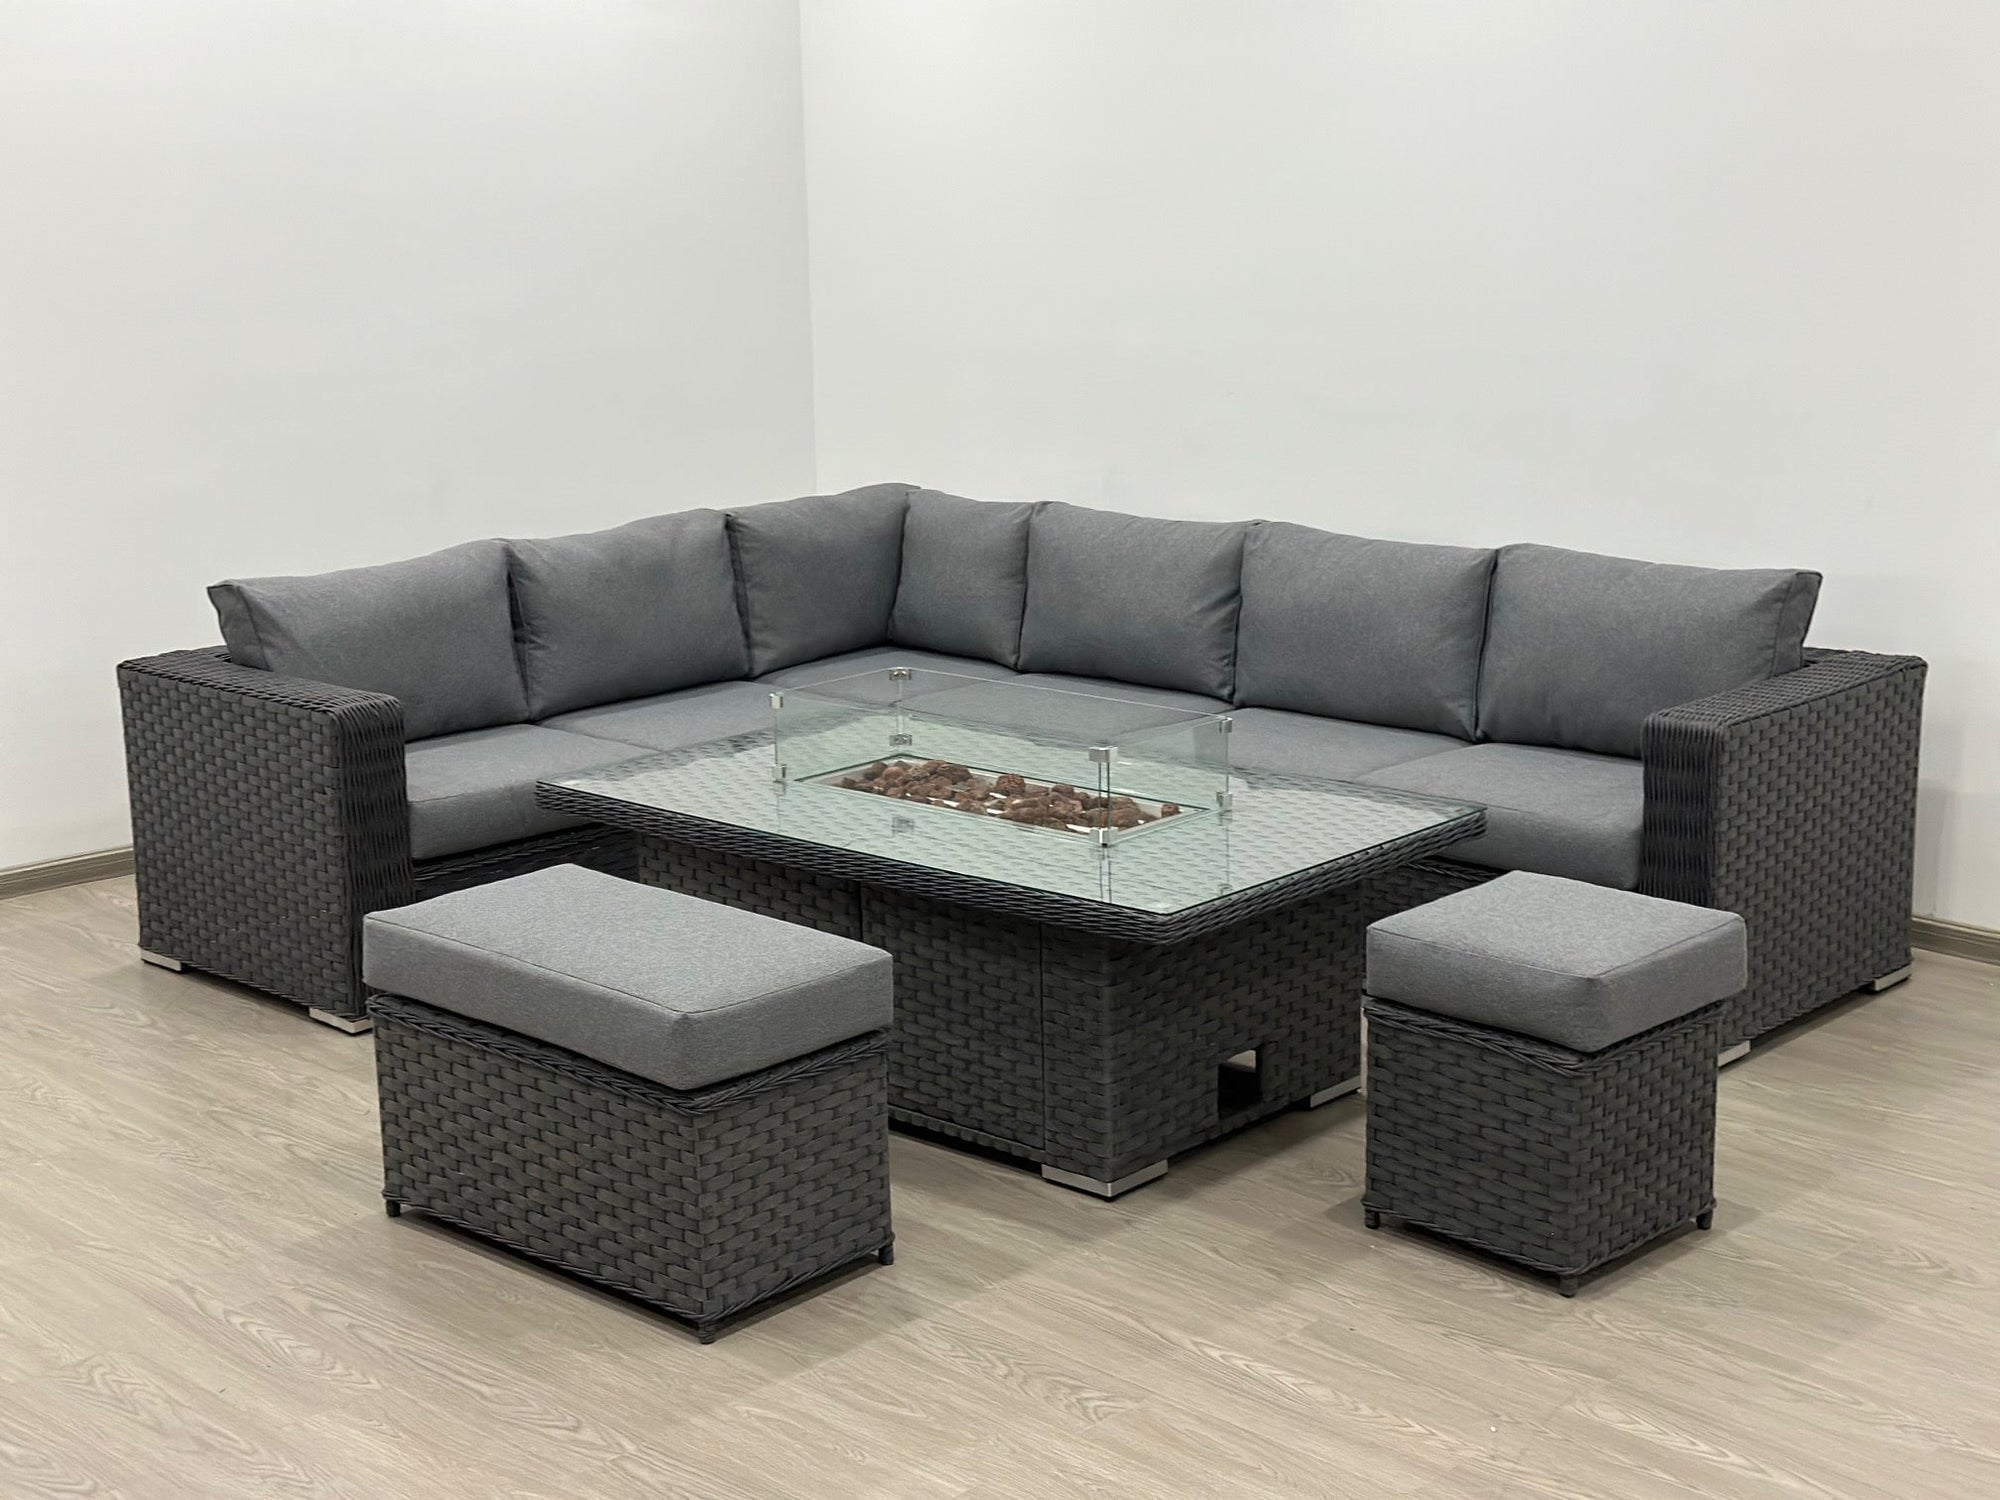 Apollo Luxury Rattan Left Hand Corner Sofa Stool Bench and Rising Fire Pit Table - Grey Rattan Furniture MaxiFurn 